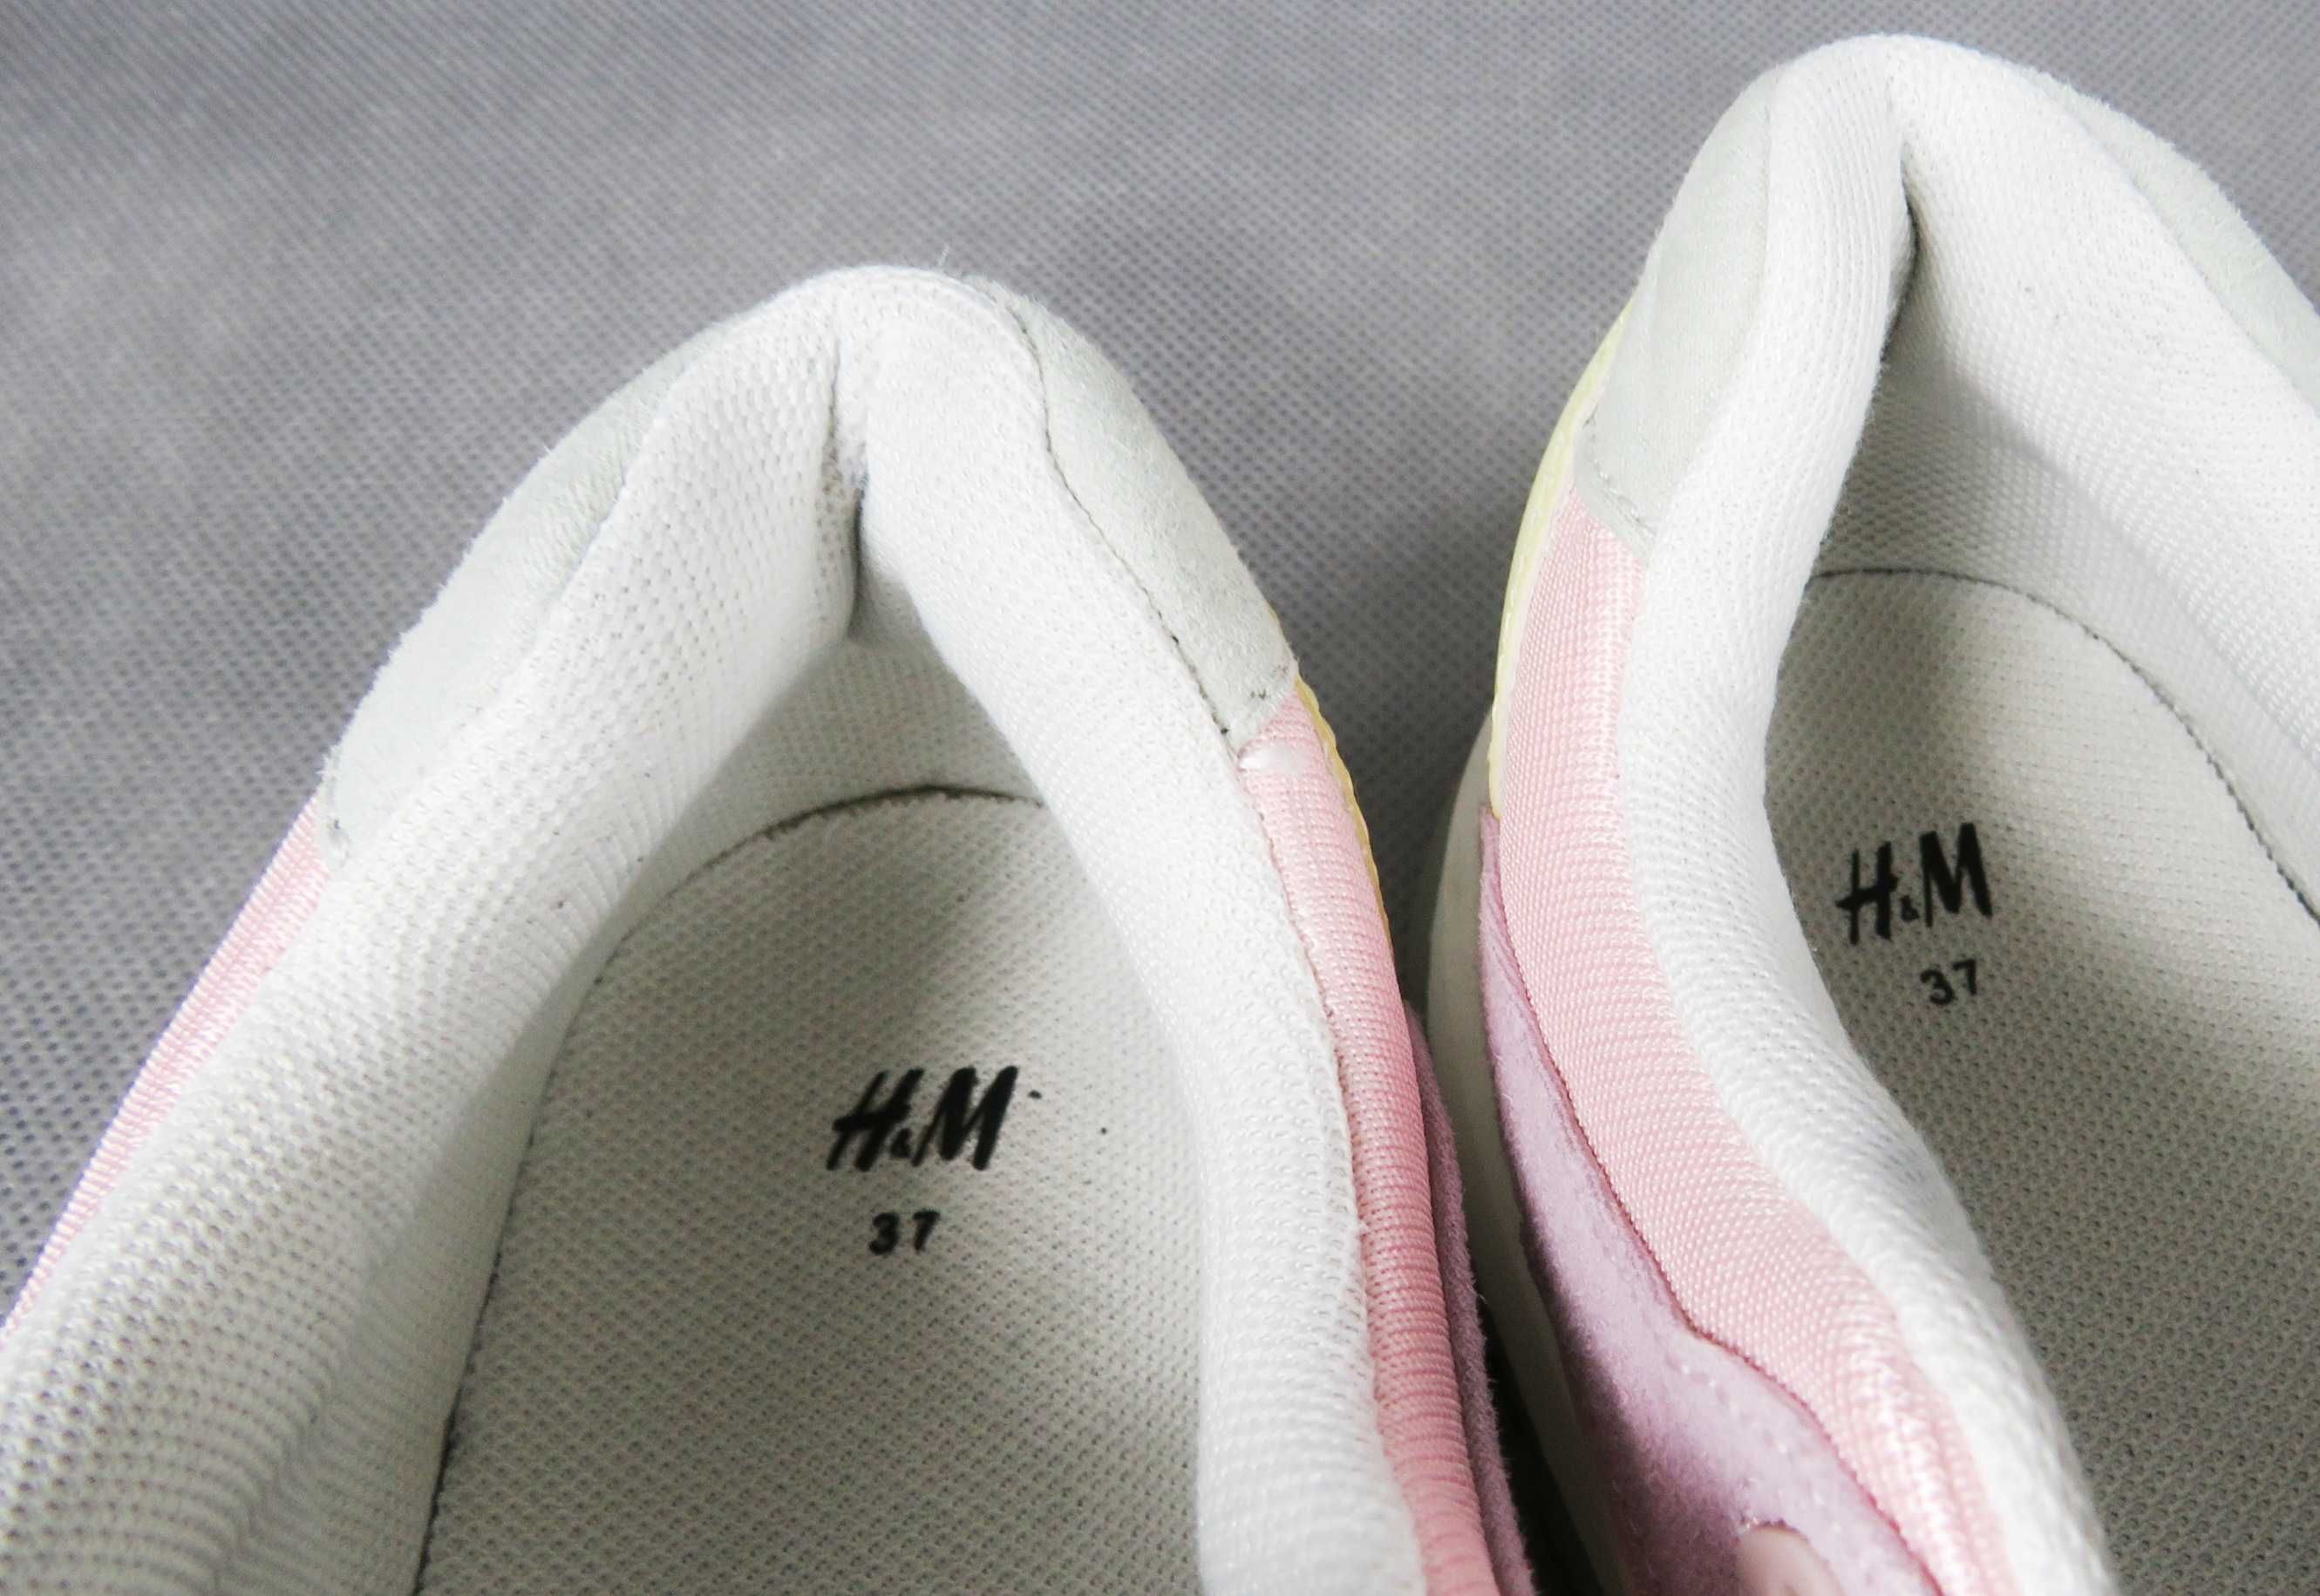 Adidasy H&M 37 buty sportowe H&M pastelowe buty sportowe